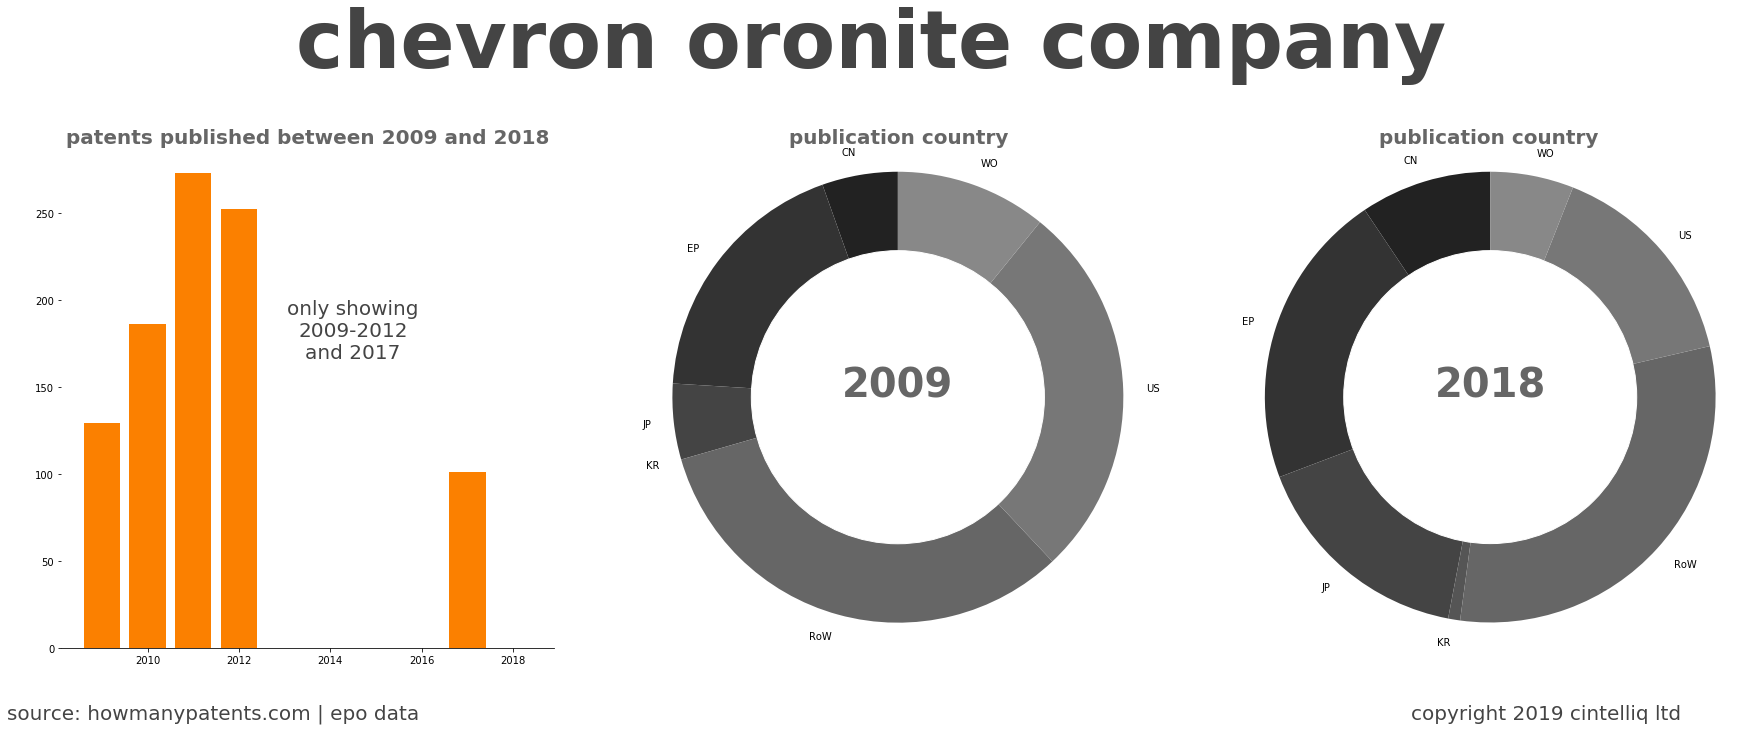 summary of patents for Chevron Oronite Company